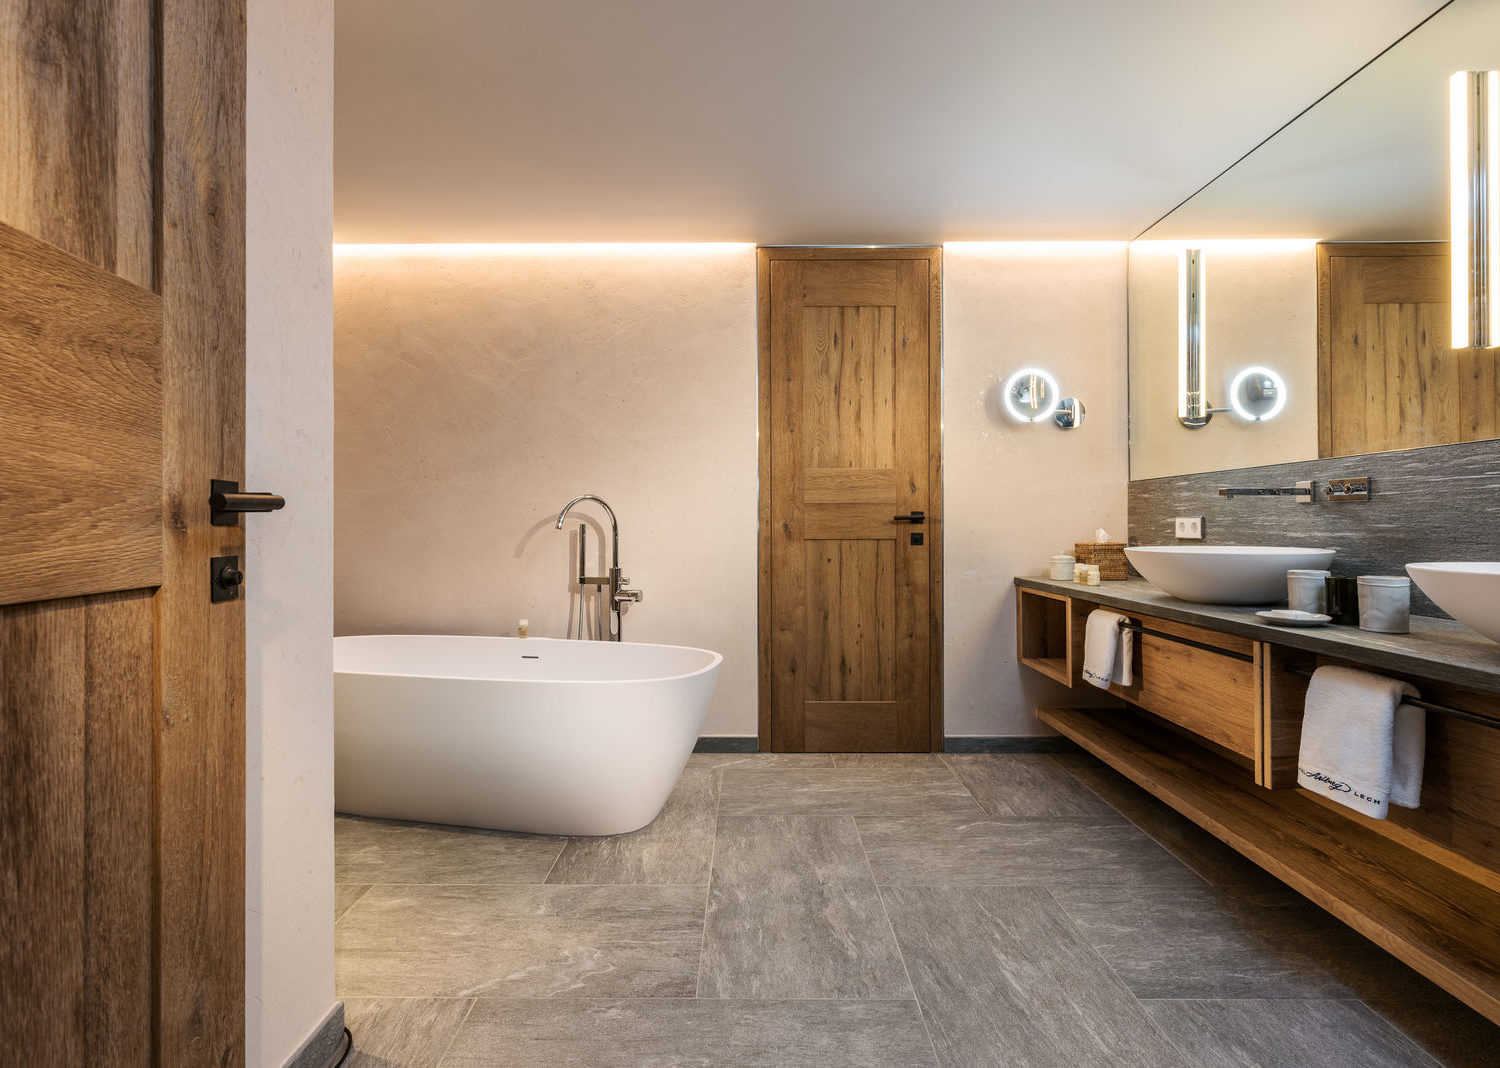 Hotel Arlberg Sleek, spacious, über comfortable bathroom. Extra points to the Japanese toilet seat